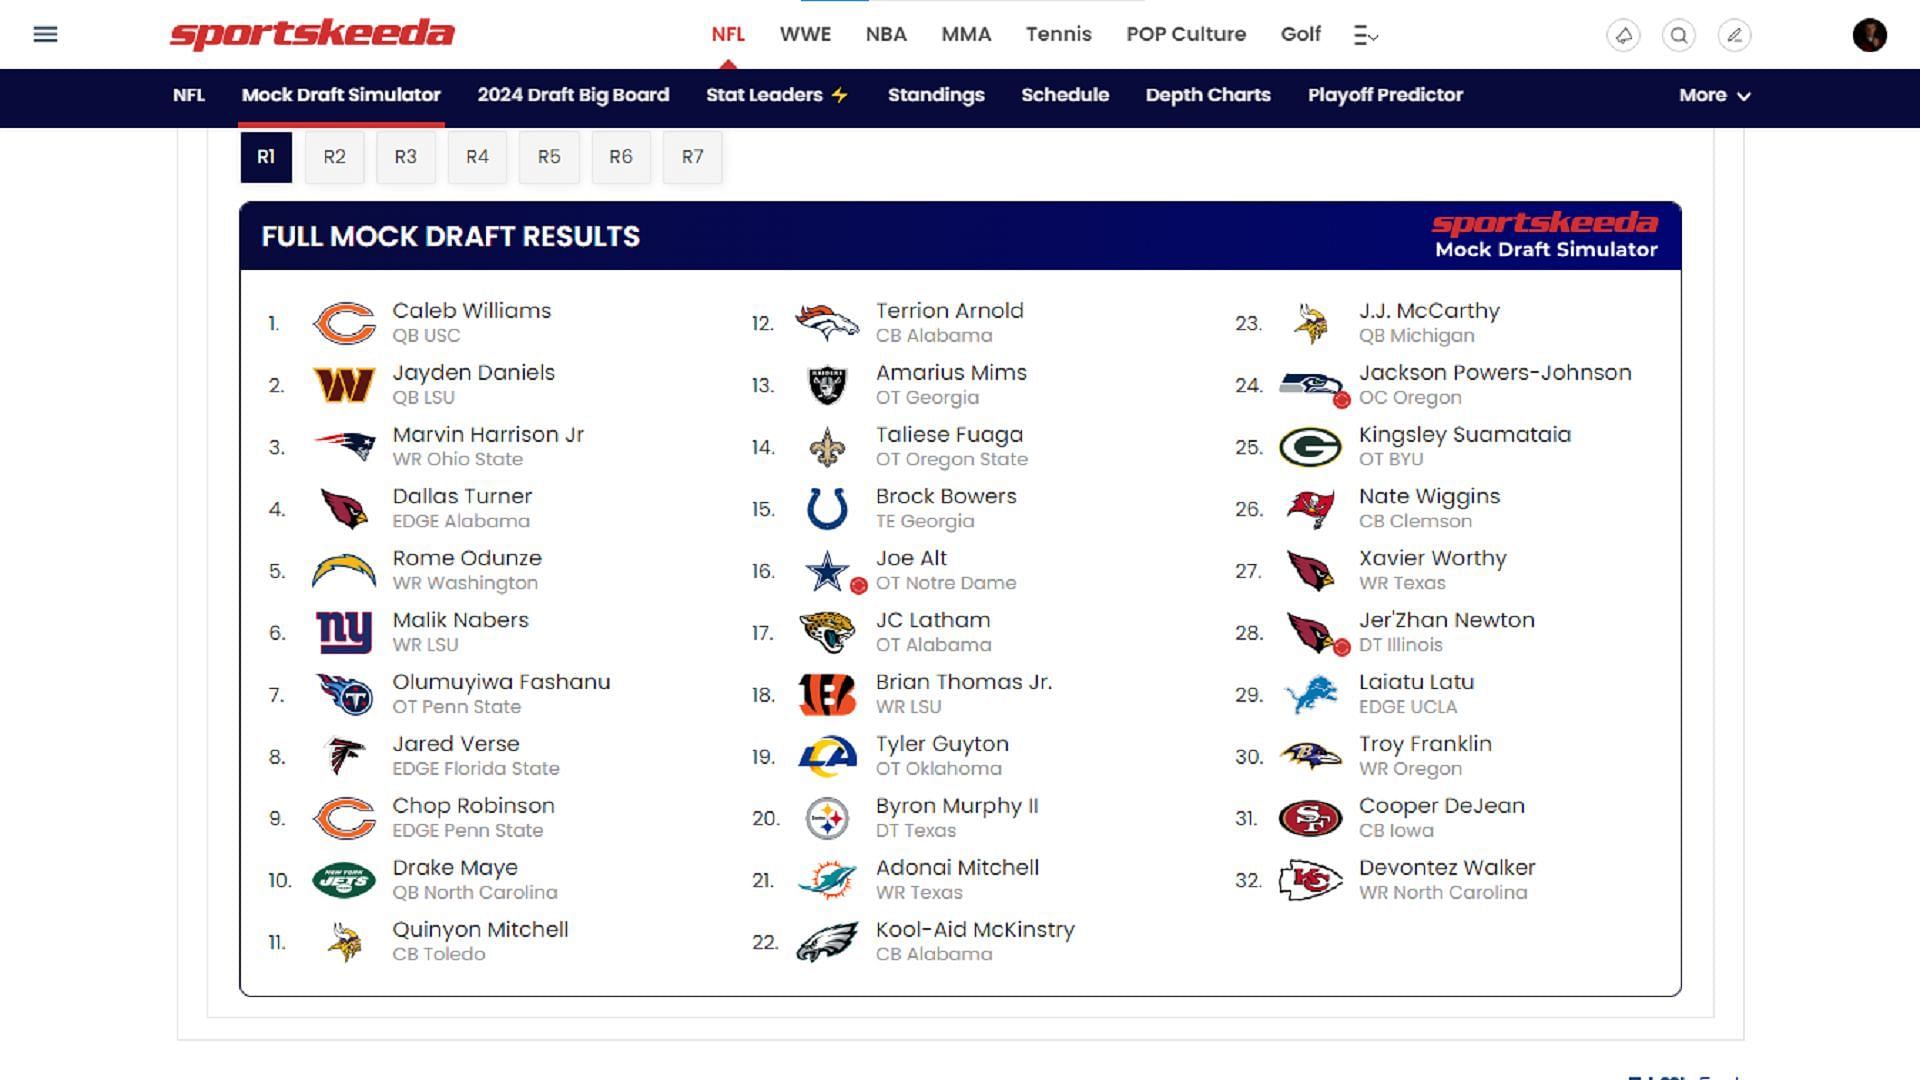 Vikings projected top draft picks via Sportskeeda&#039;s Mock Draft Simulator